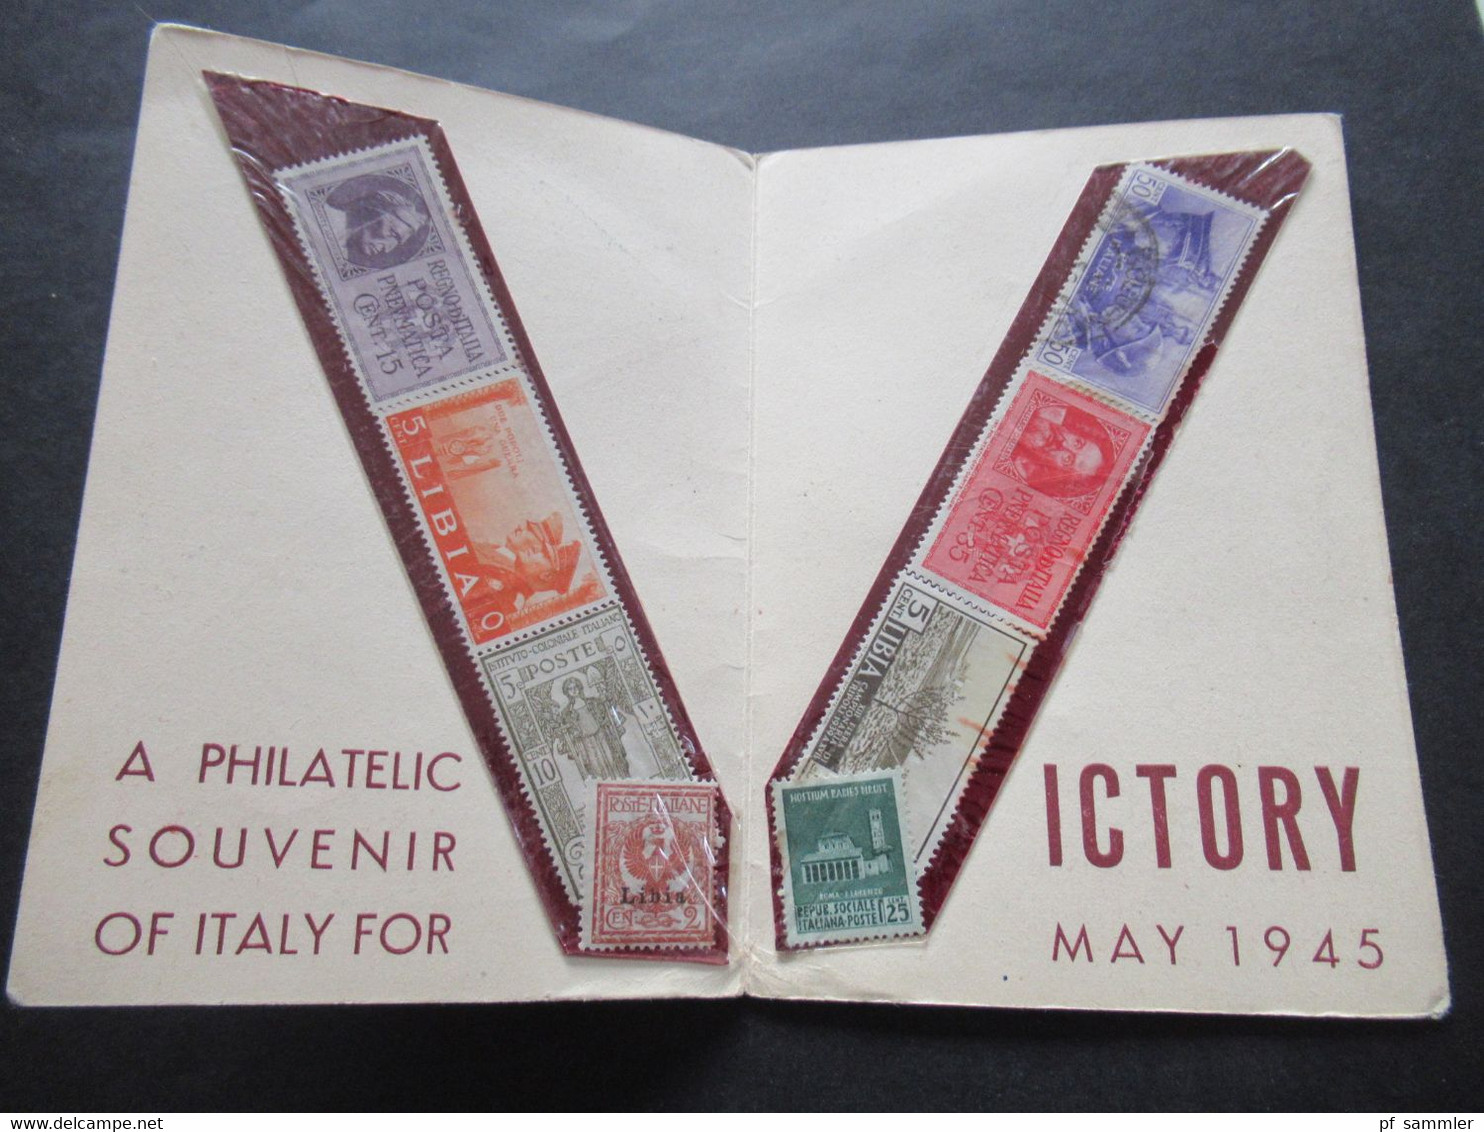 Klappkarte Mai 1945 Britische Propaganda Britisch Forces In Italy A Philatelic Souvenir Of Italy For Victory May 1945 - Oorlogspropaganda